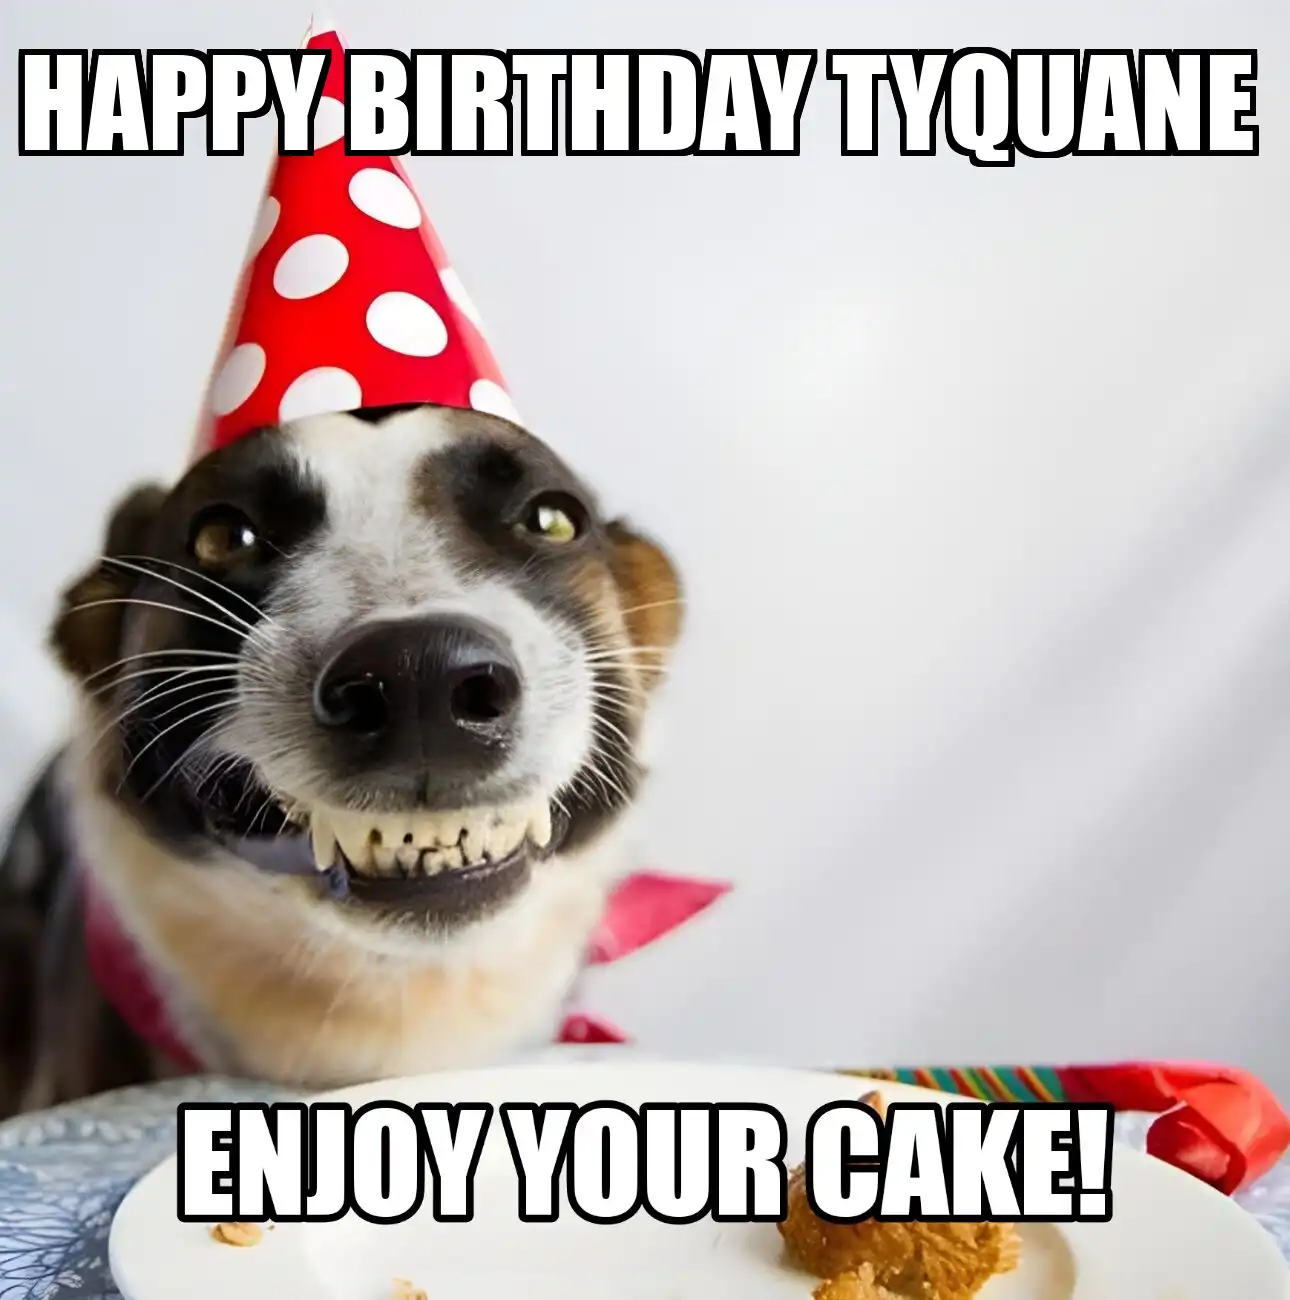 Happy Birthday Tyquane Enjoy Your Cake Dog Meme